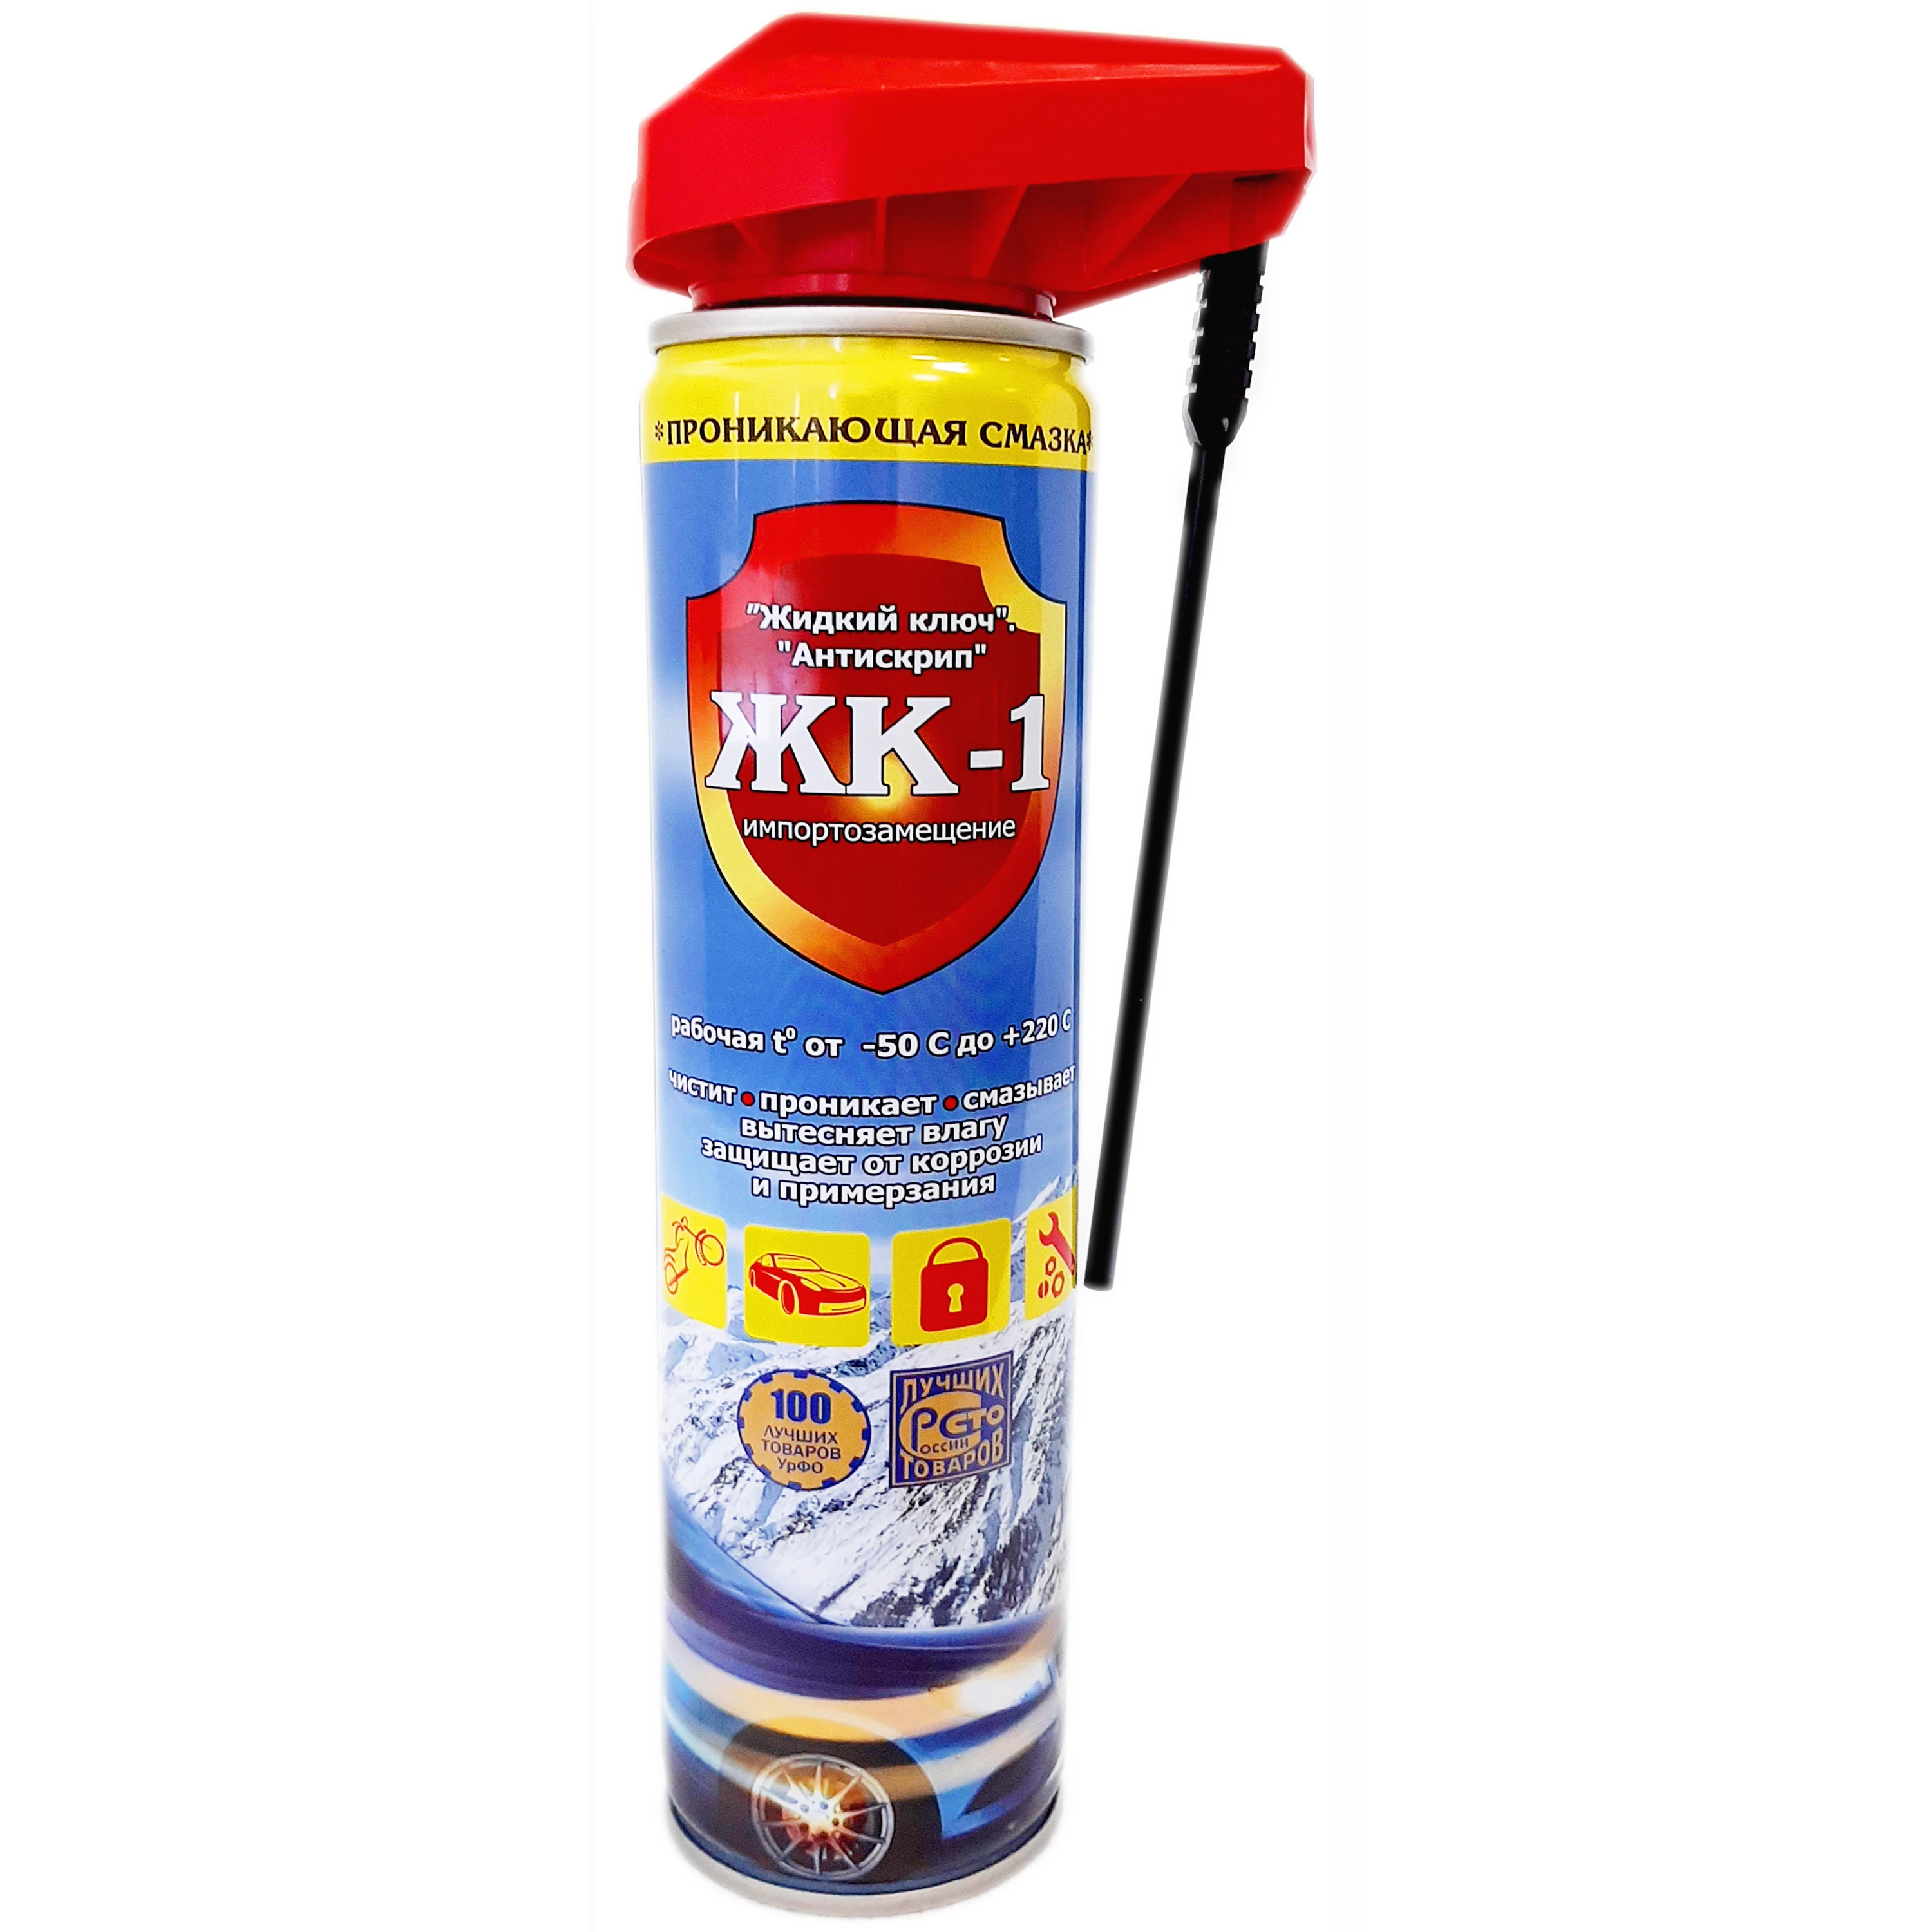 LK-1 liquid key 270 ml AT anti-creak water-dispersion penetrating lubricant